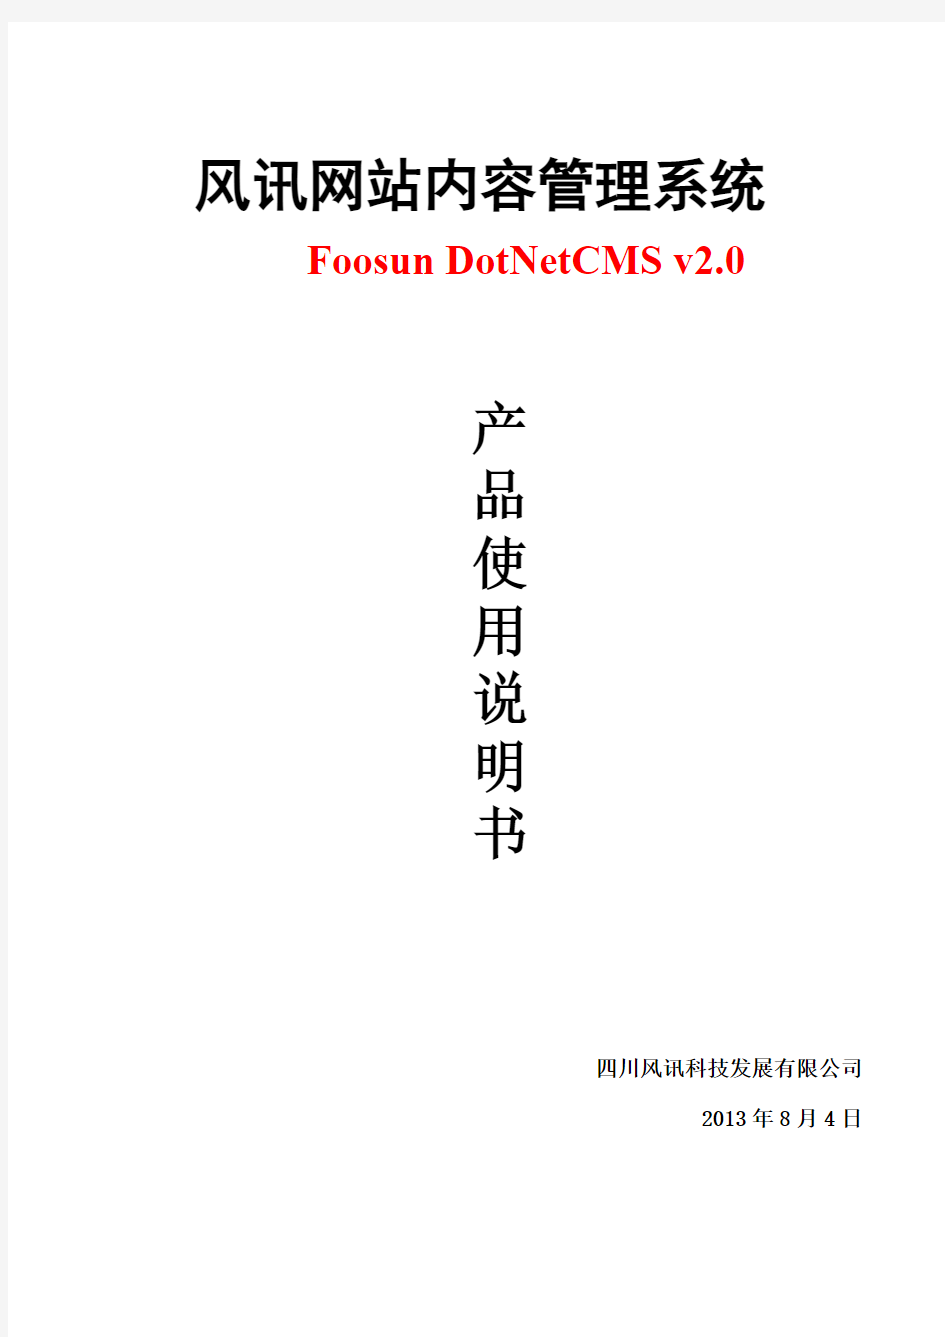 FoosunDotNetCMS_V2.0_使用说明书